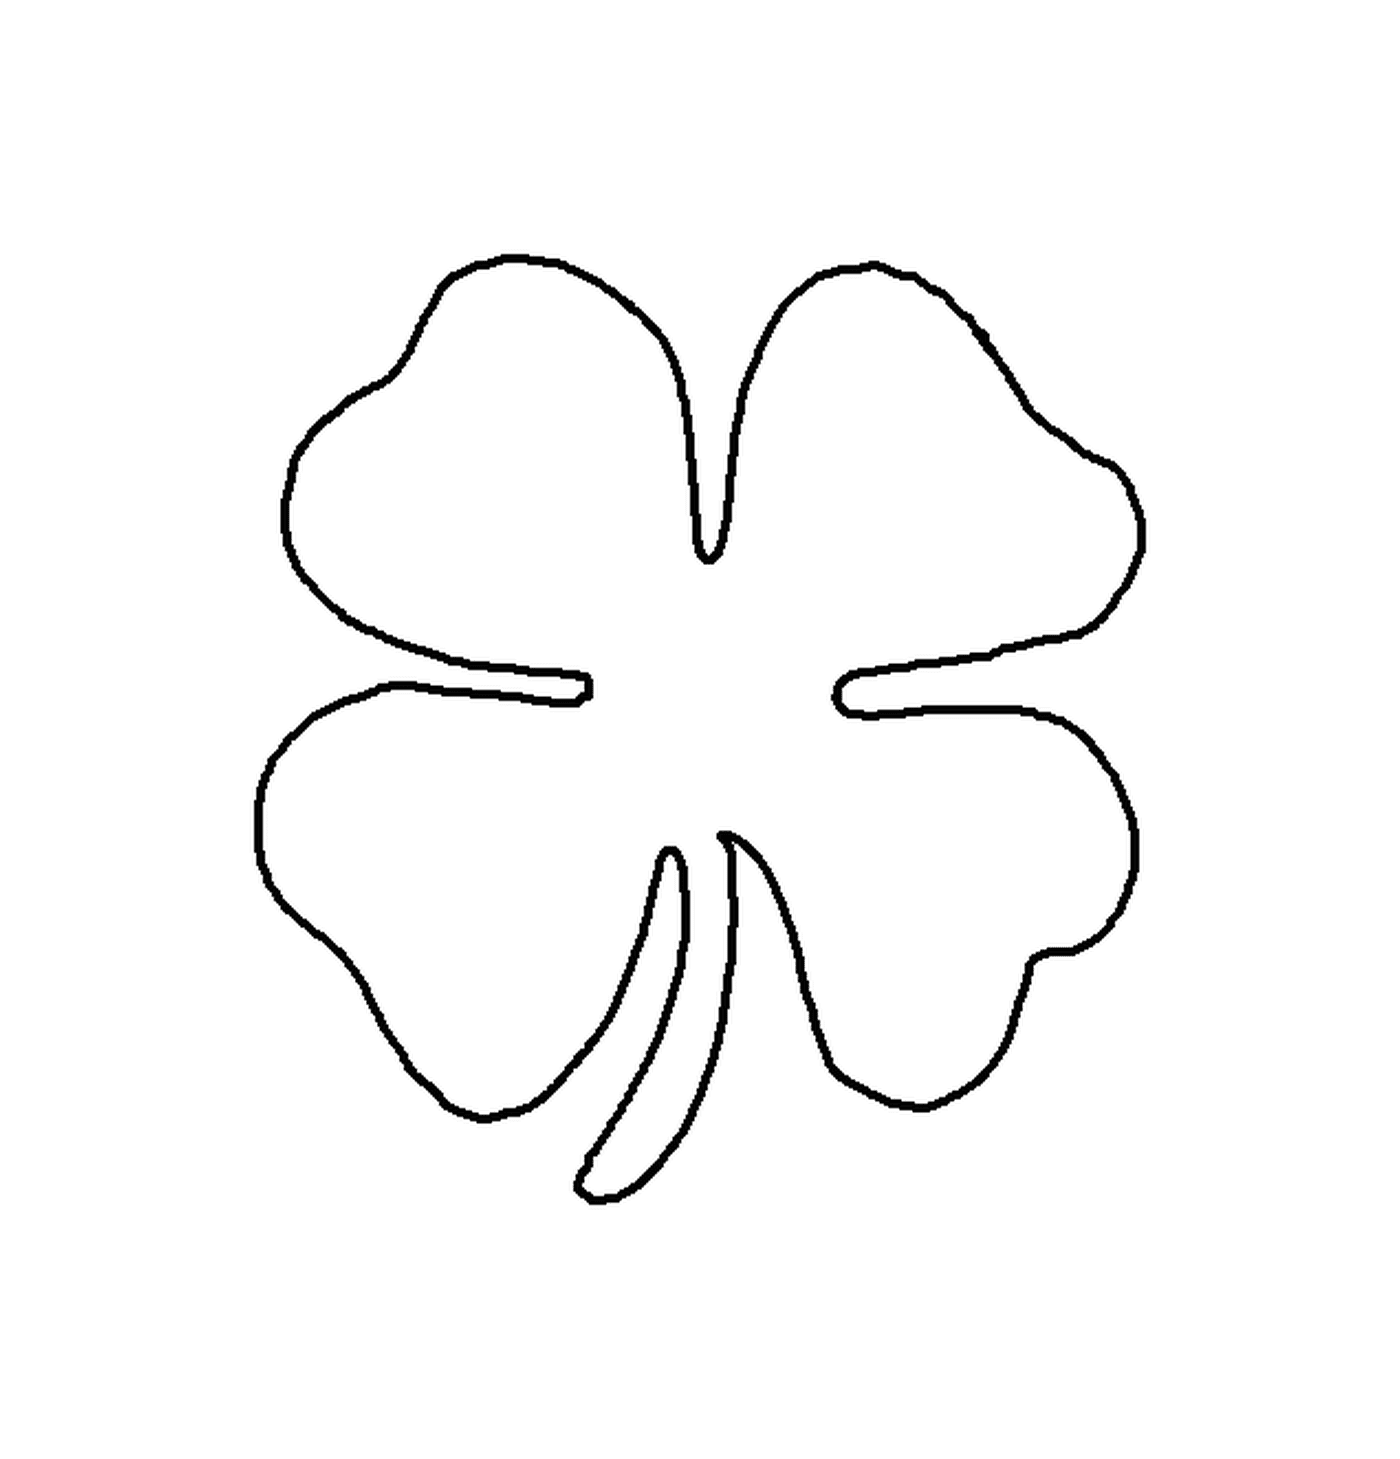  Шамрок, символ Ирландии для Сент-Патрика 